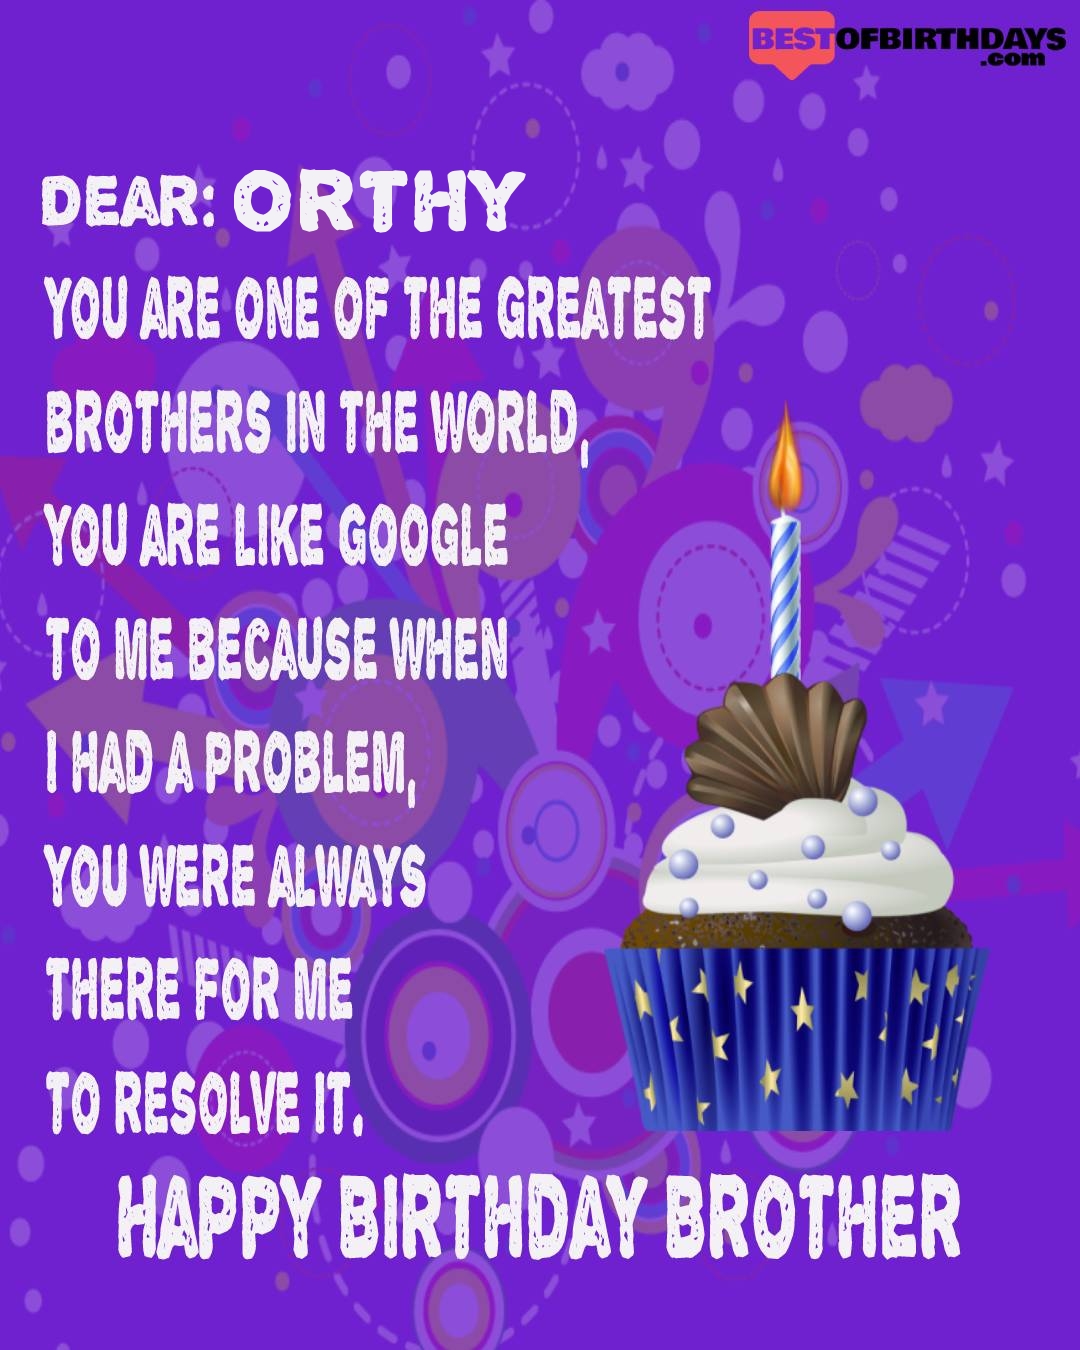 Happy birthday orthy bhai brother bro